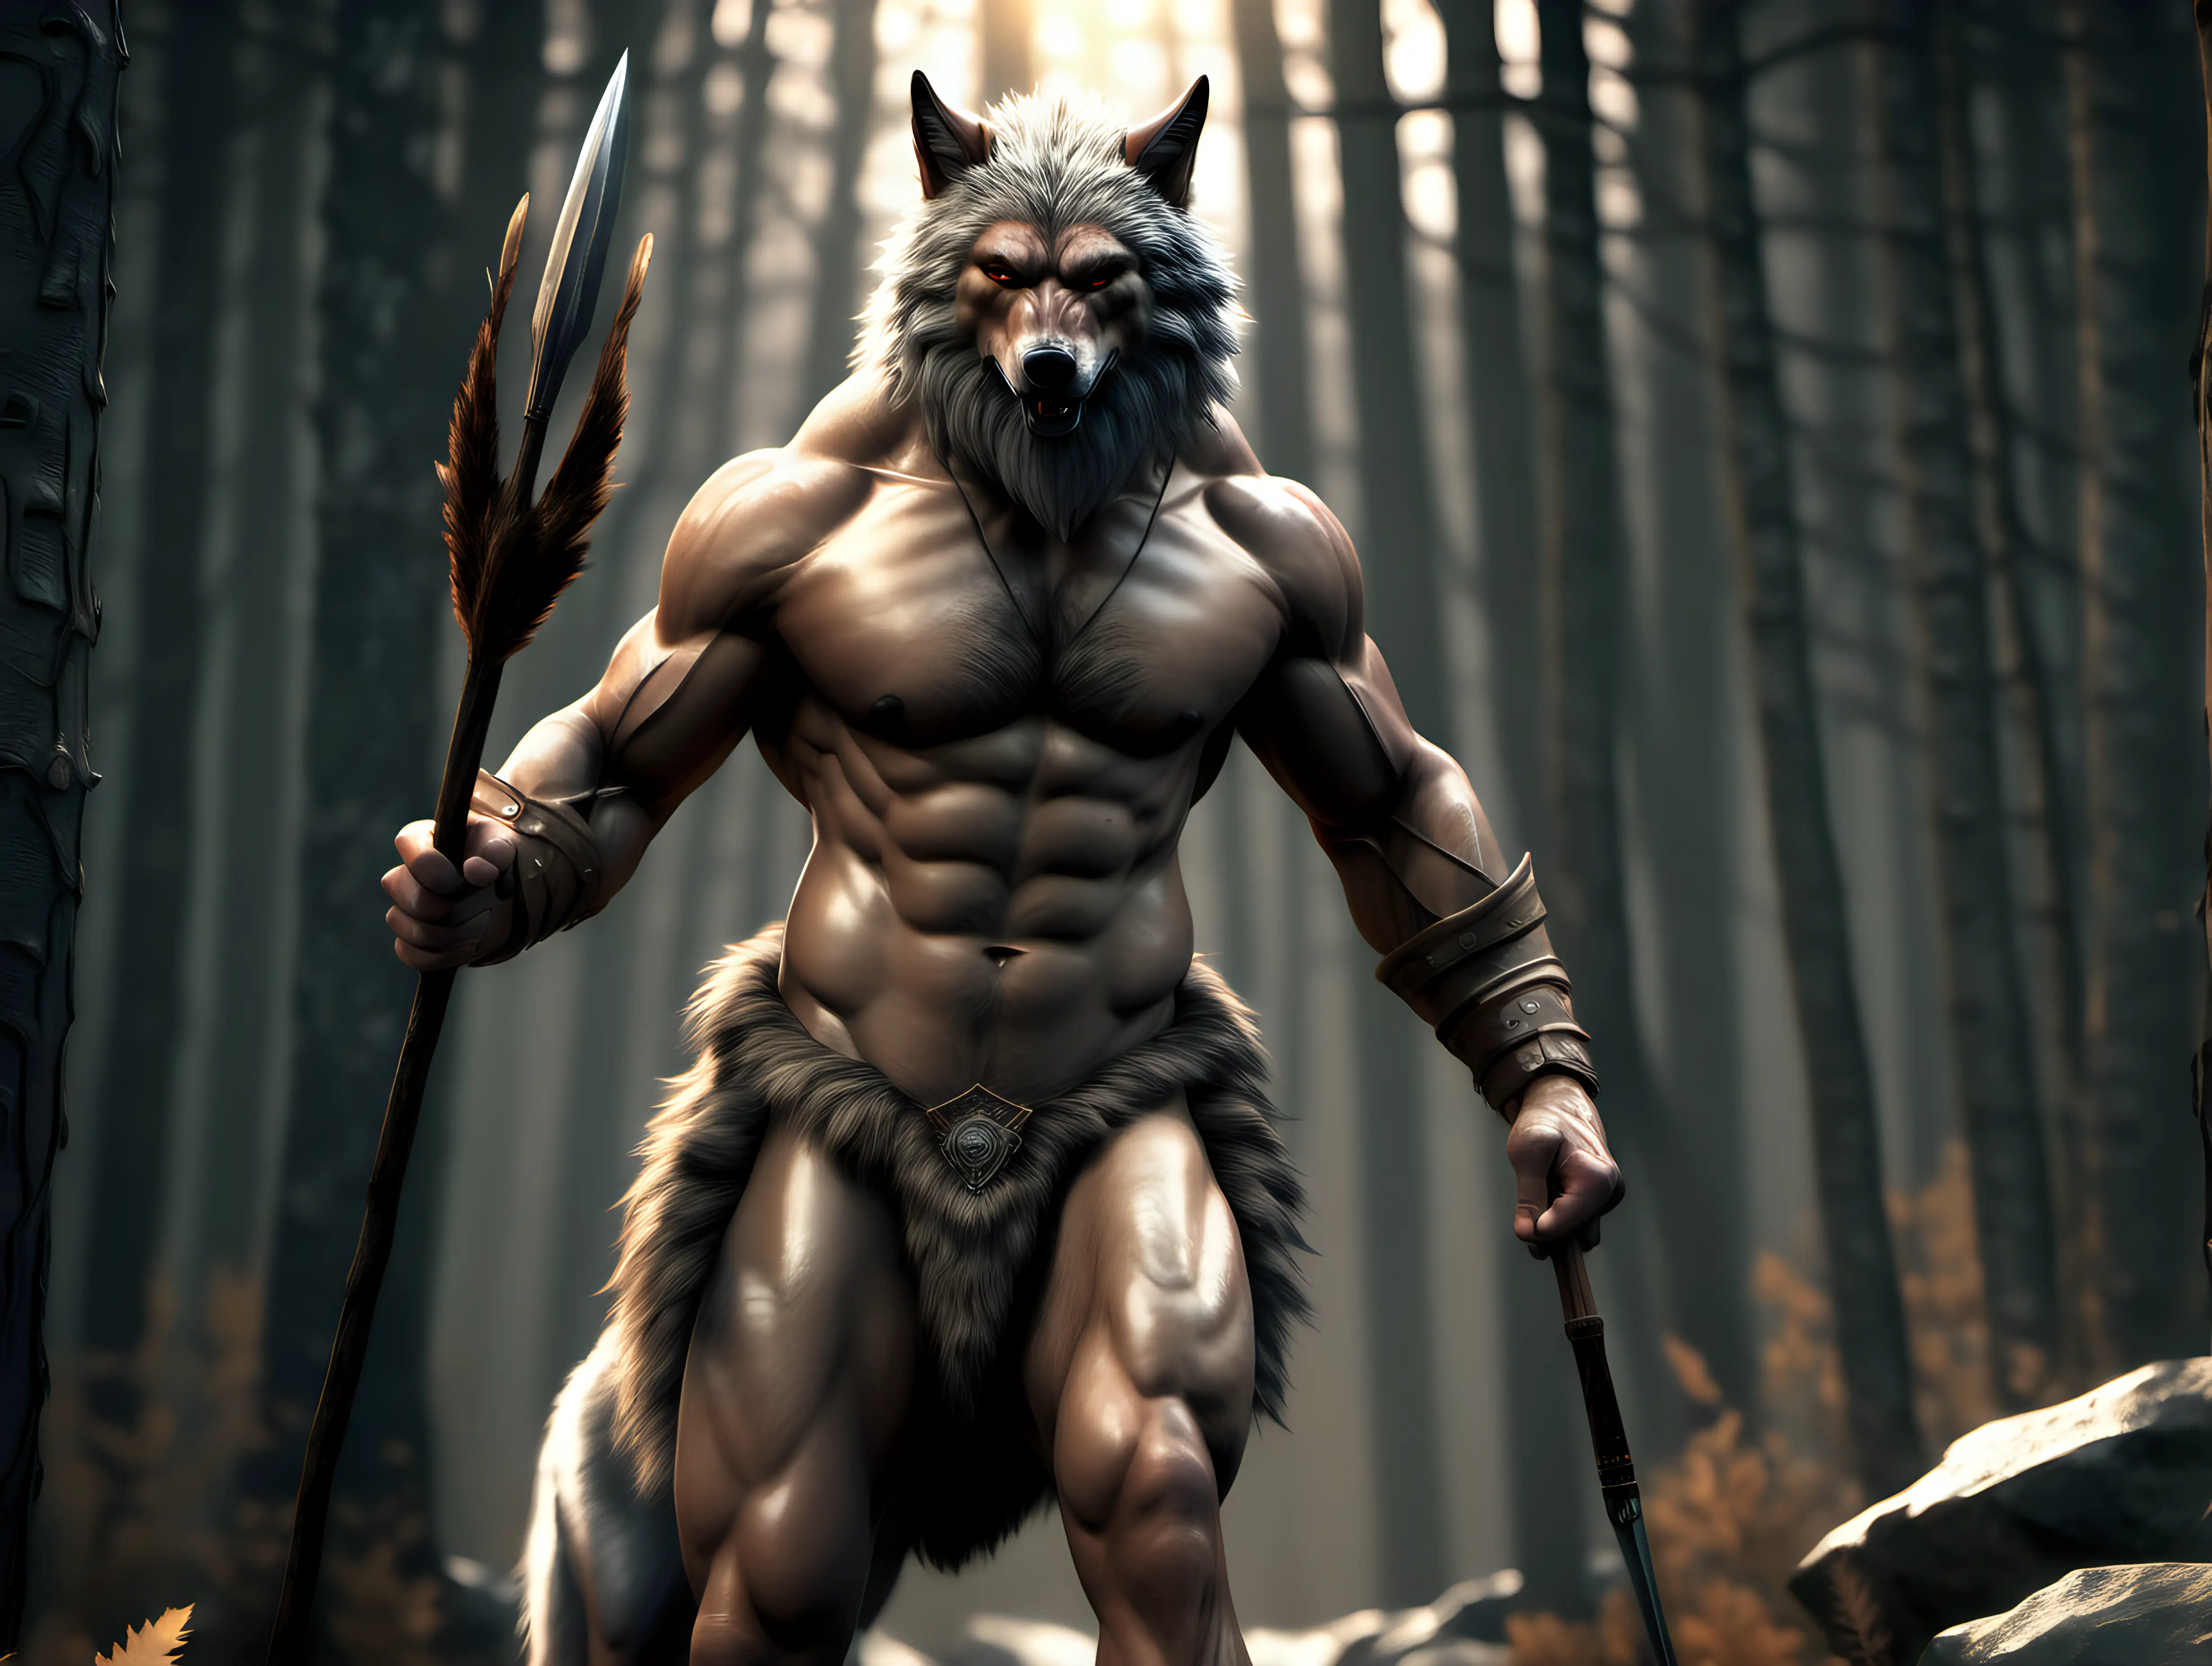 god of nature, naked, muscular, hairy, hunt, wild, forest, survival, horseback, strong, wolves, spear, fur, 8k ultrarealistic, 